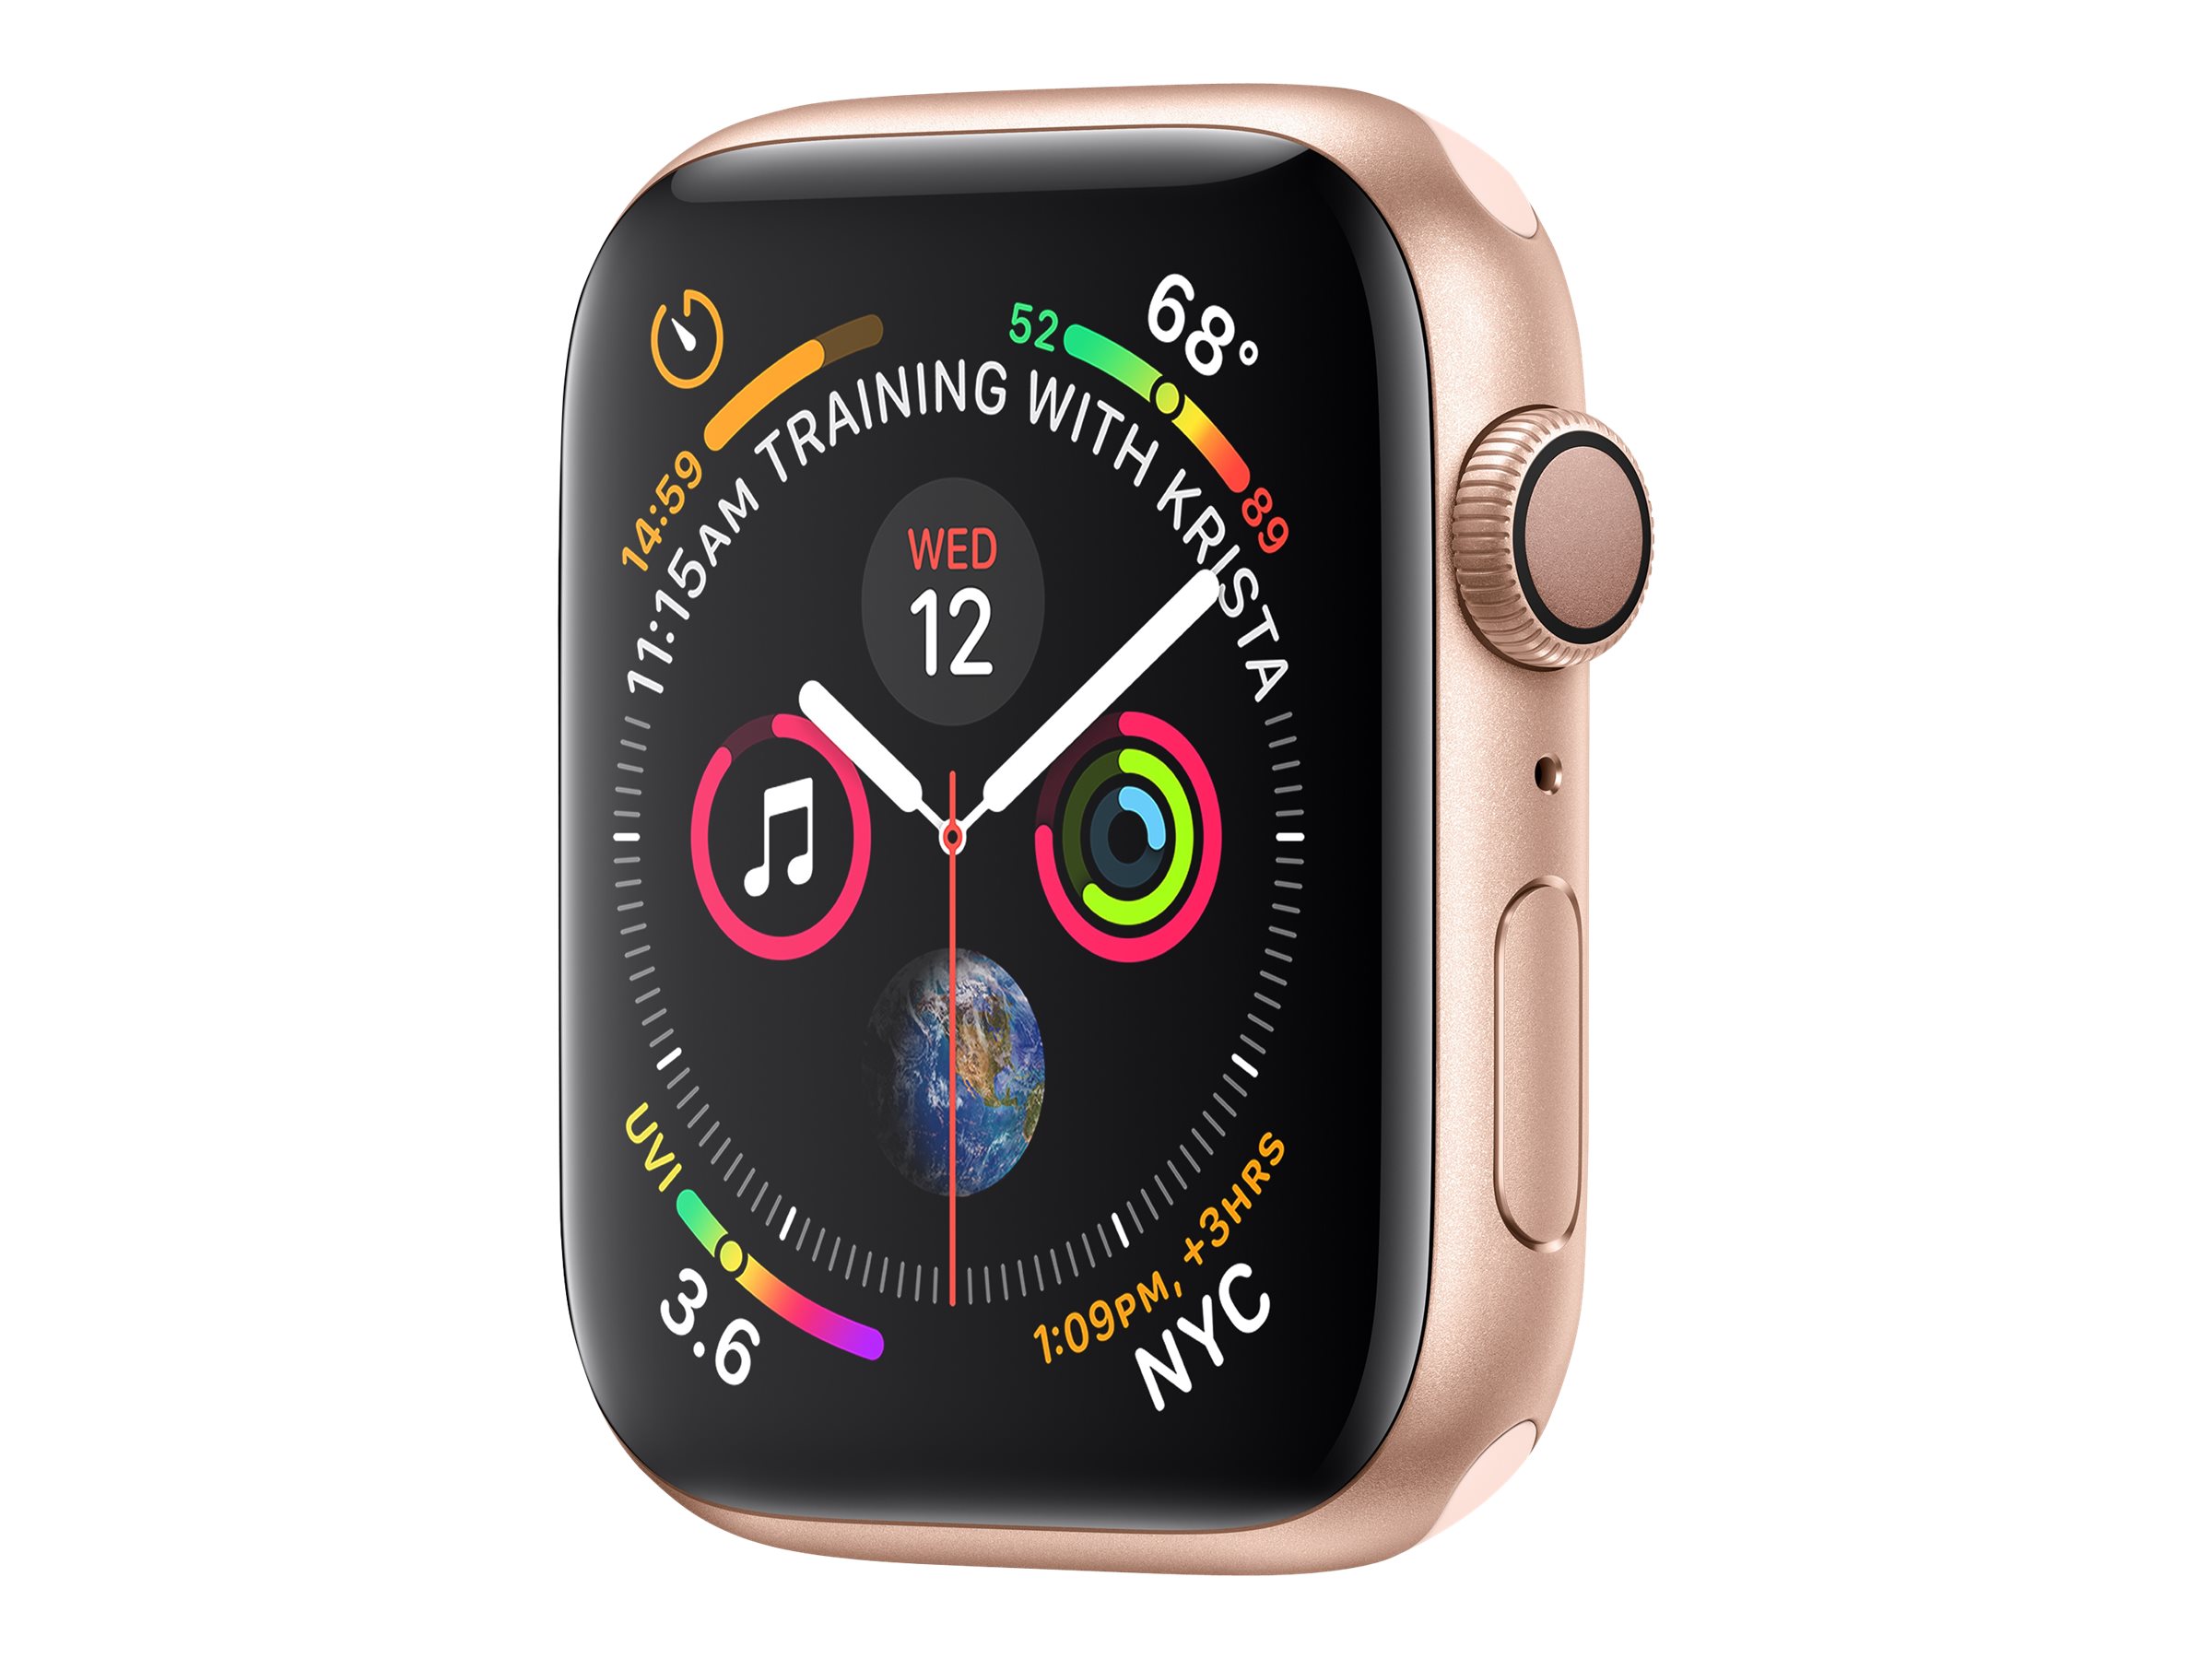 Restored Apple Watch Series 4 (GPS) - 40 mm - Gold Aluminum - Smart Watch - 16 GB - Wi-Fi, Bluetooth - 1.06 oz. Demo (Refurbished) - image 1 of 3